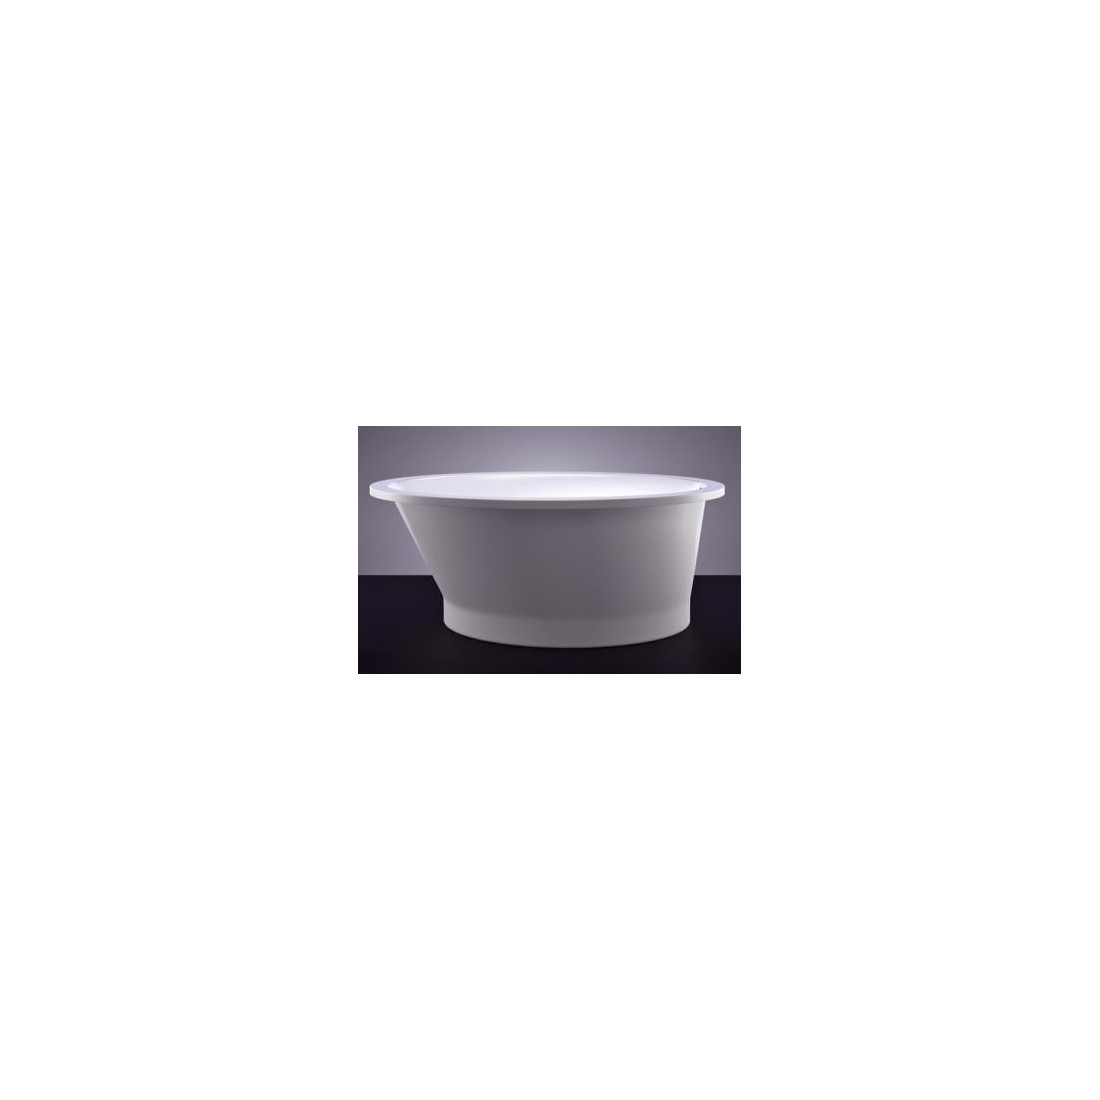 Akmens masės vonia VISPOOL SOLARE 177x107 ovali balta